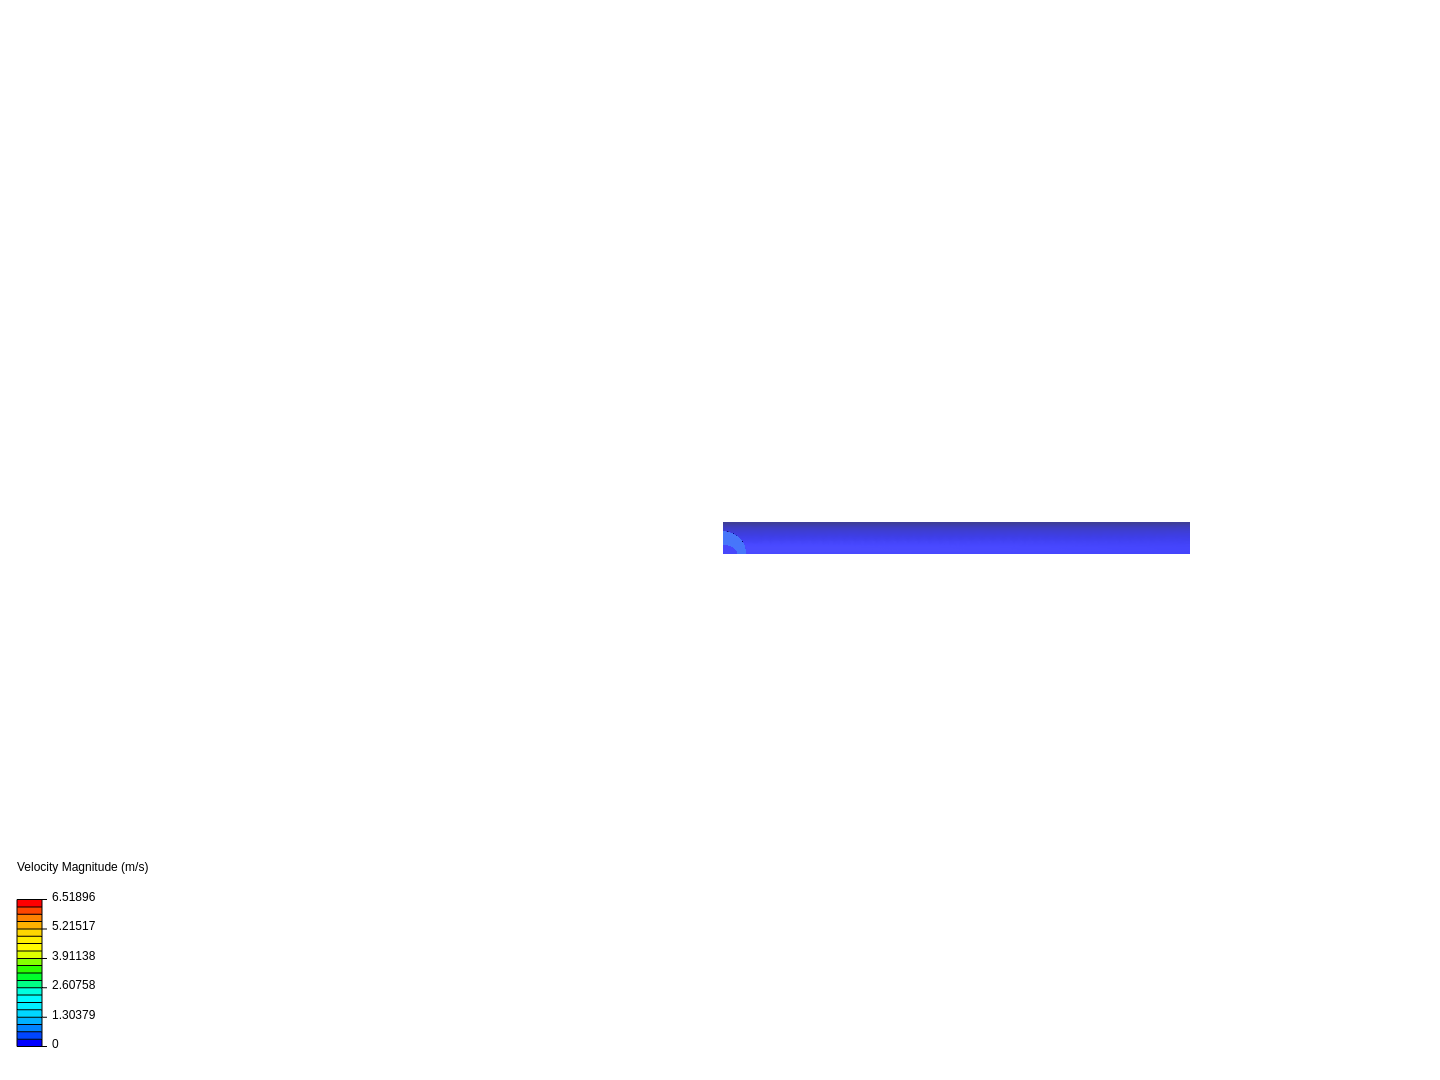 Simple Pipe Simulation image